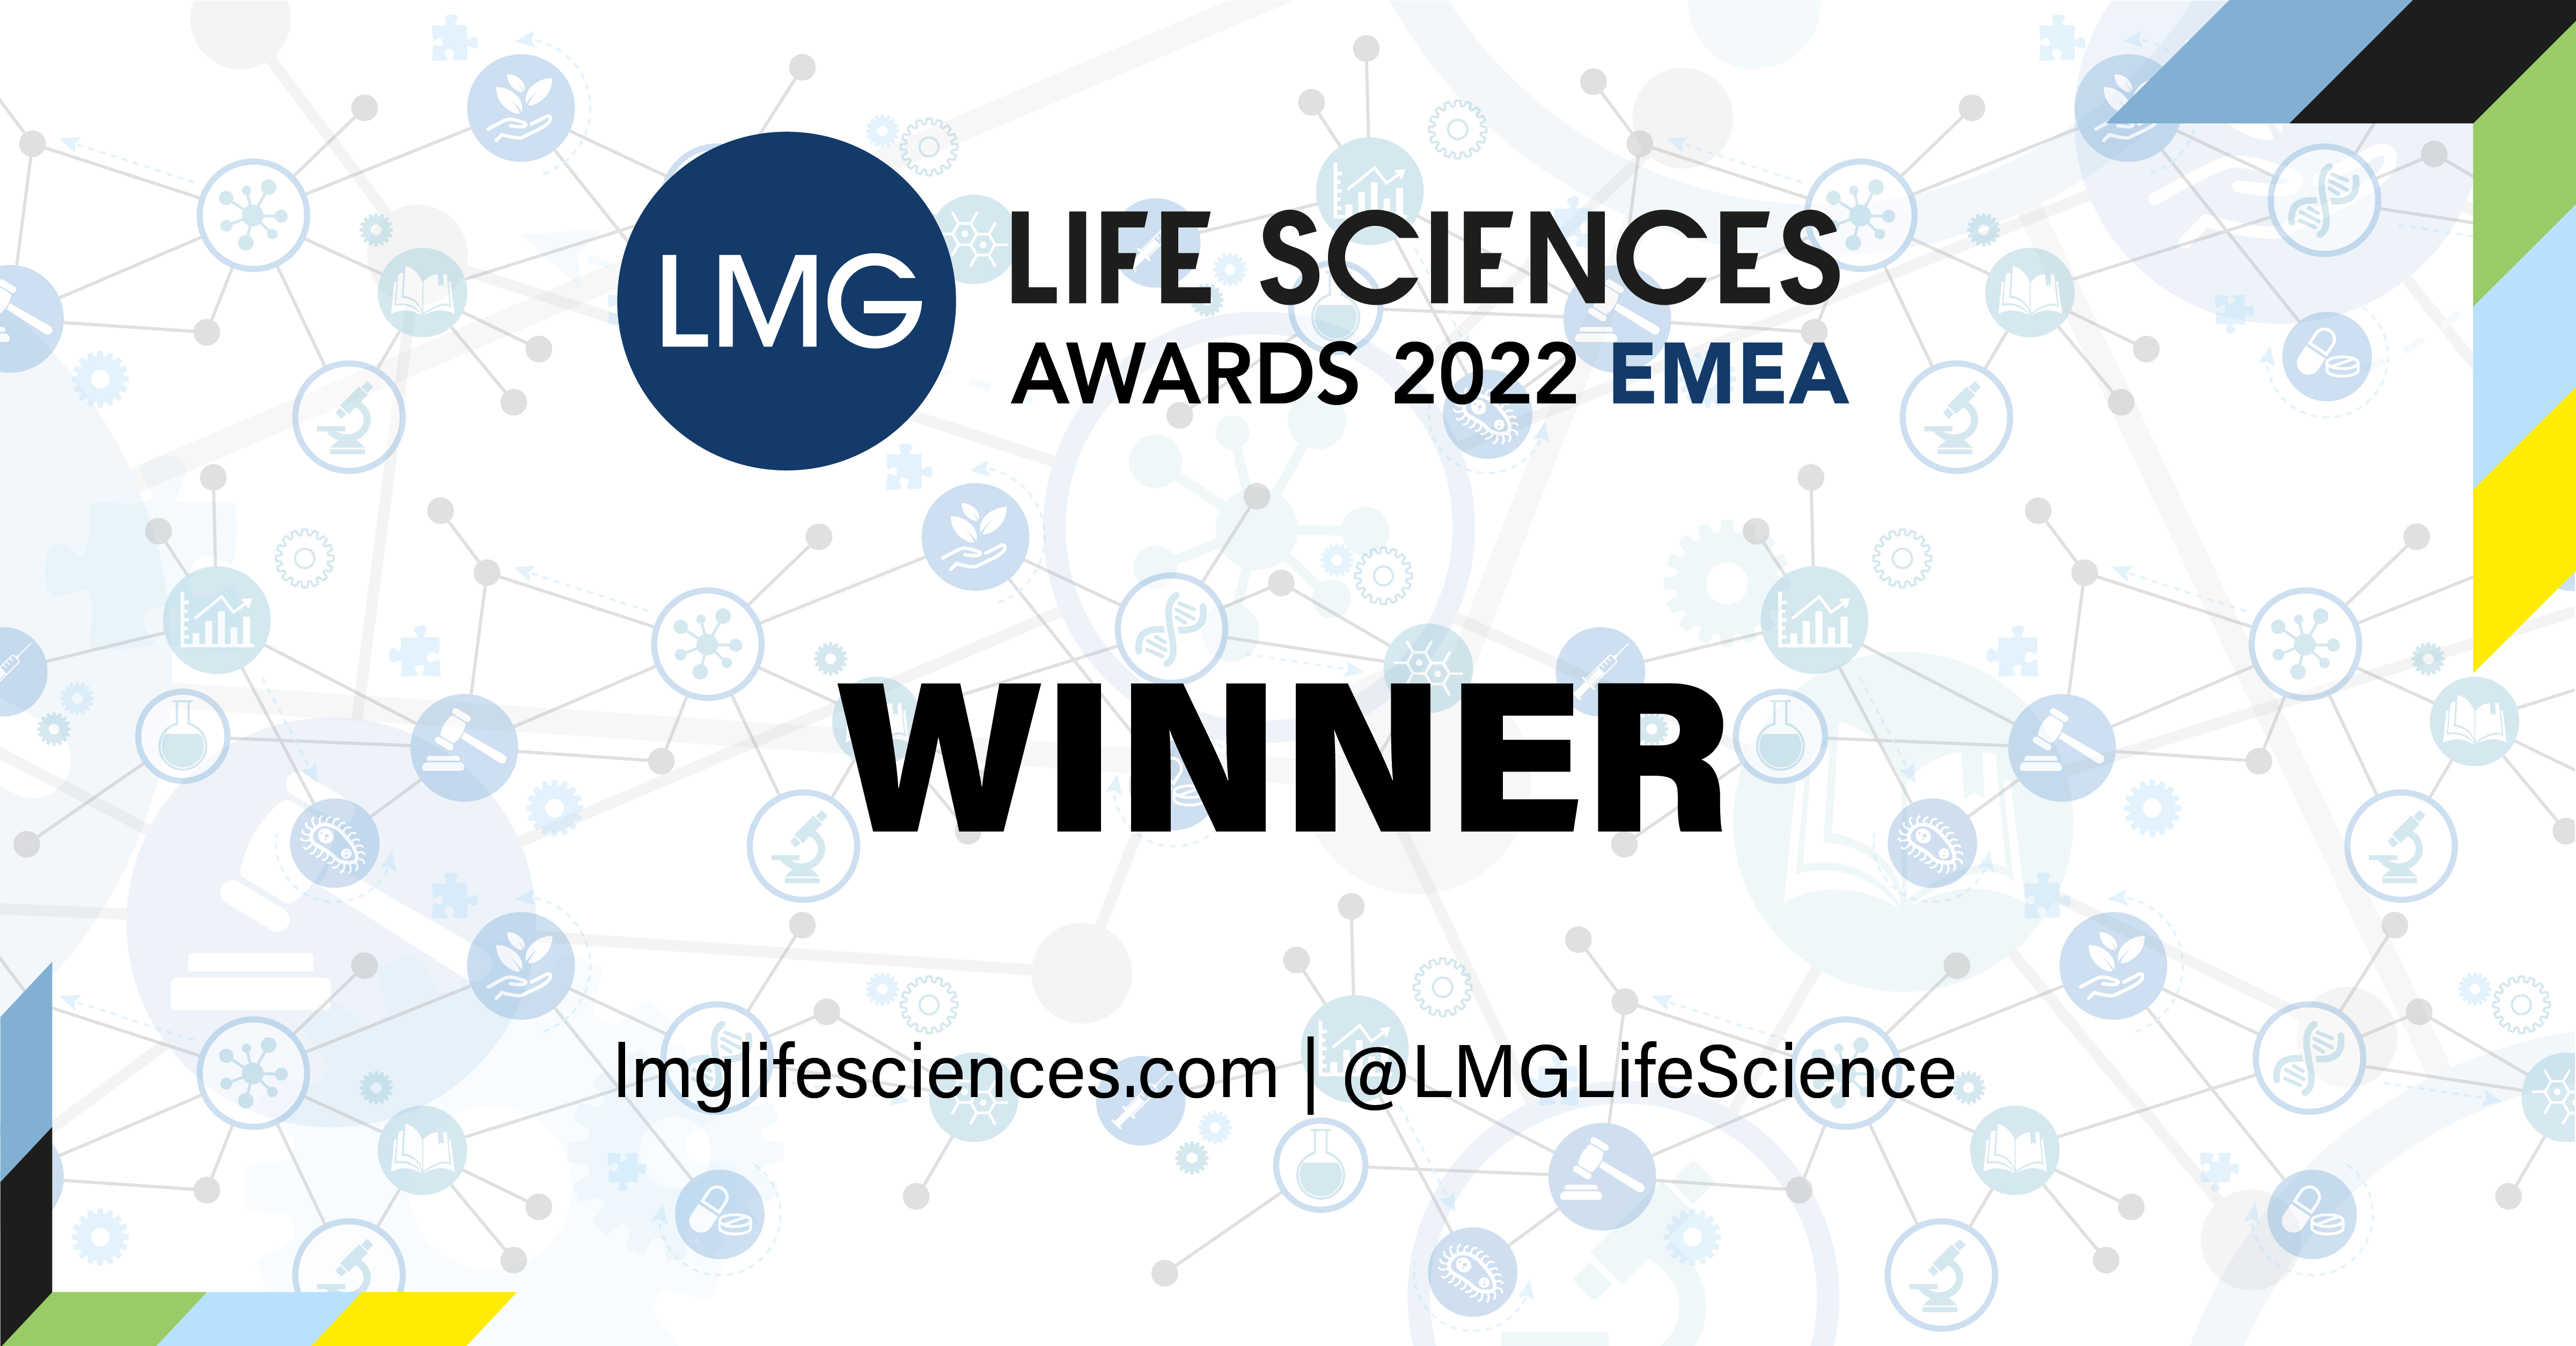 EMEA Life Sciences Awards 2022